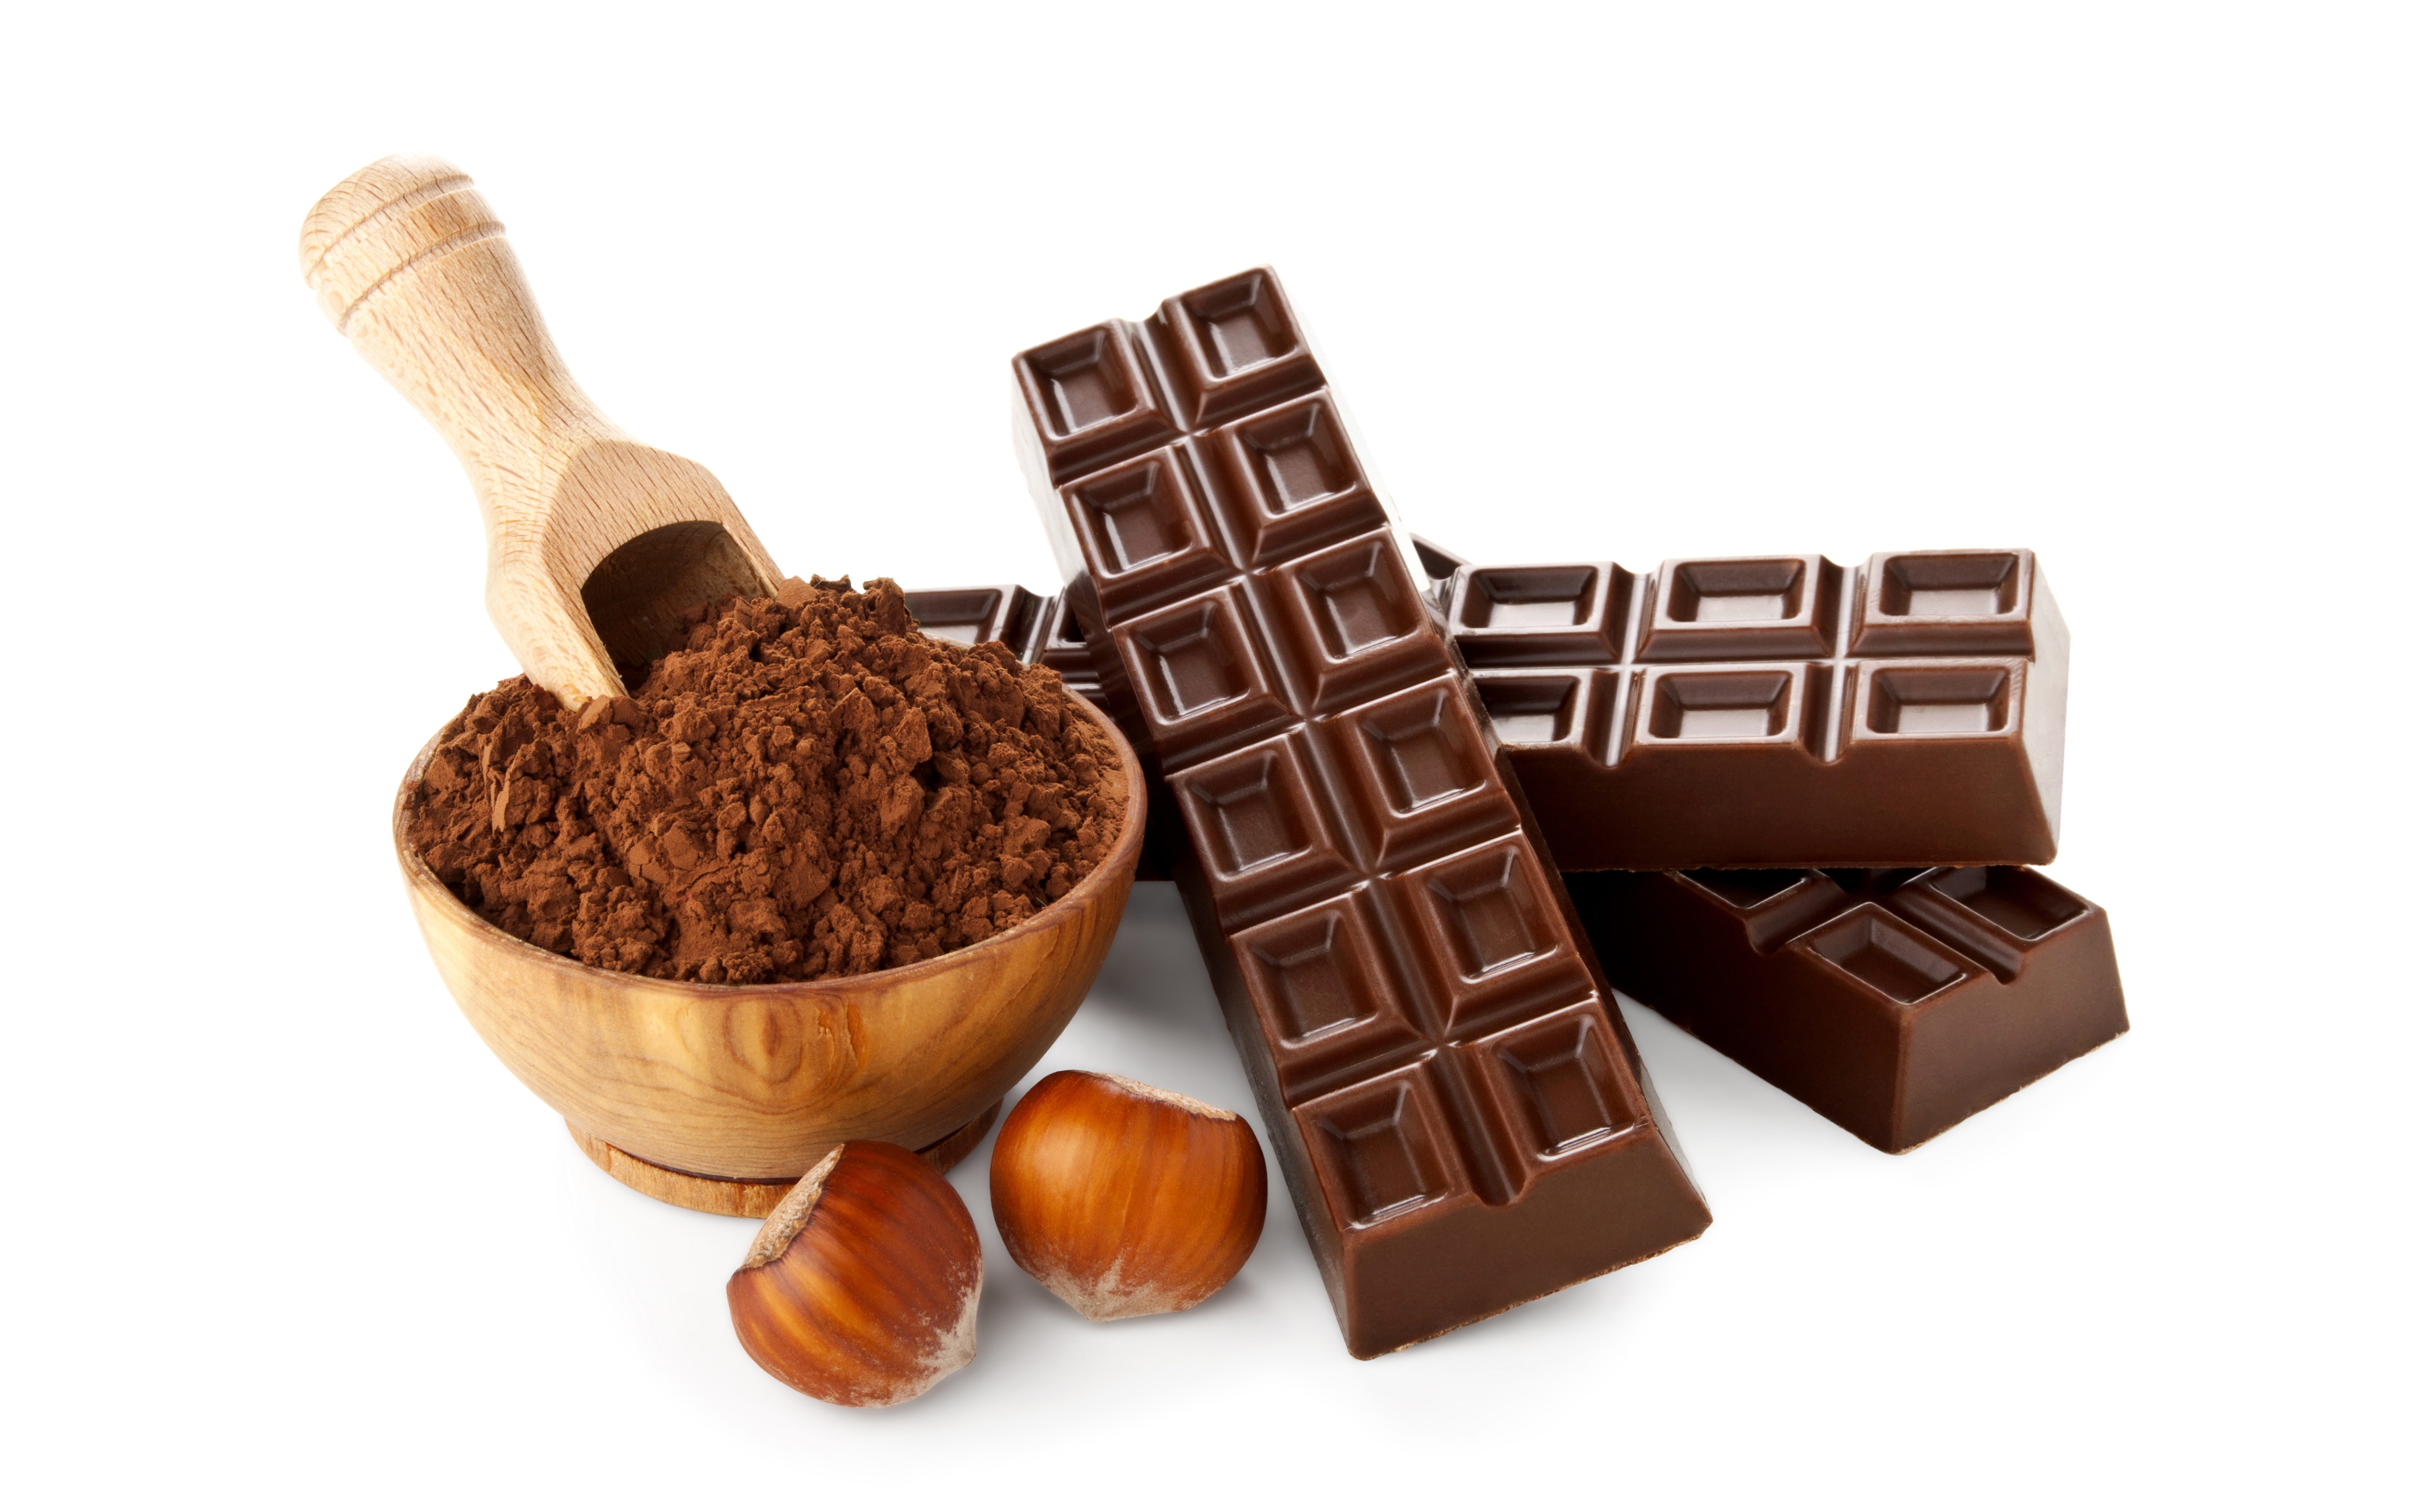 Шоколад продукт. Шоколад. Шоколадные конфеты. Шоколадные сладости. Шоколад на белом фоне.